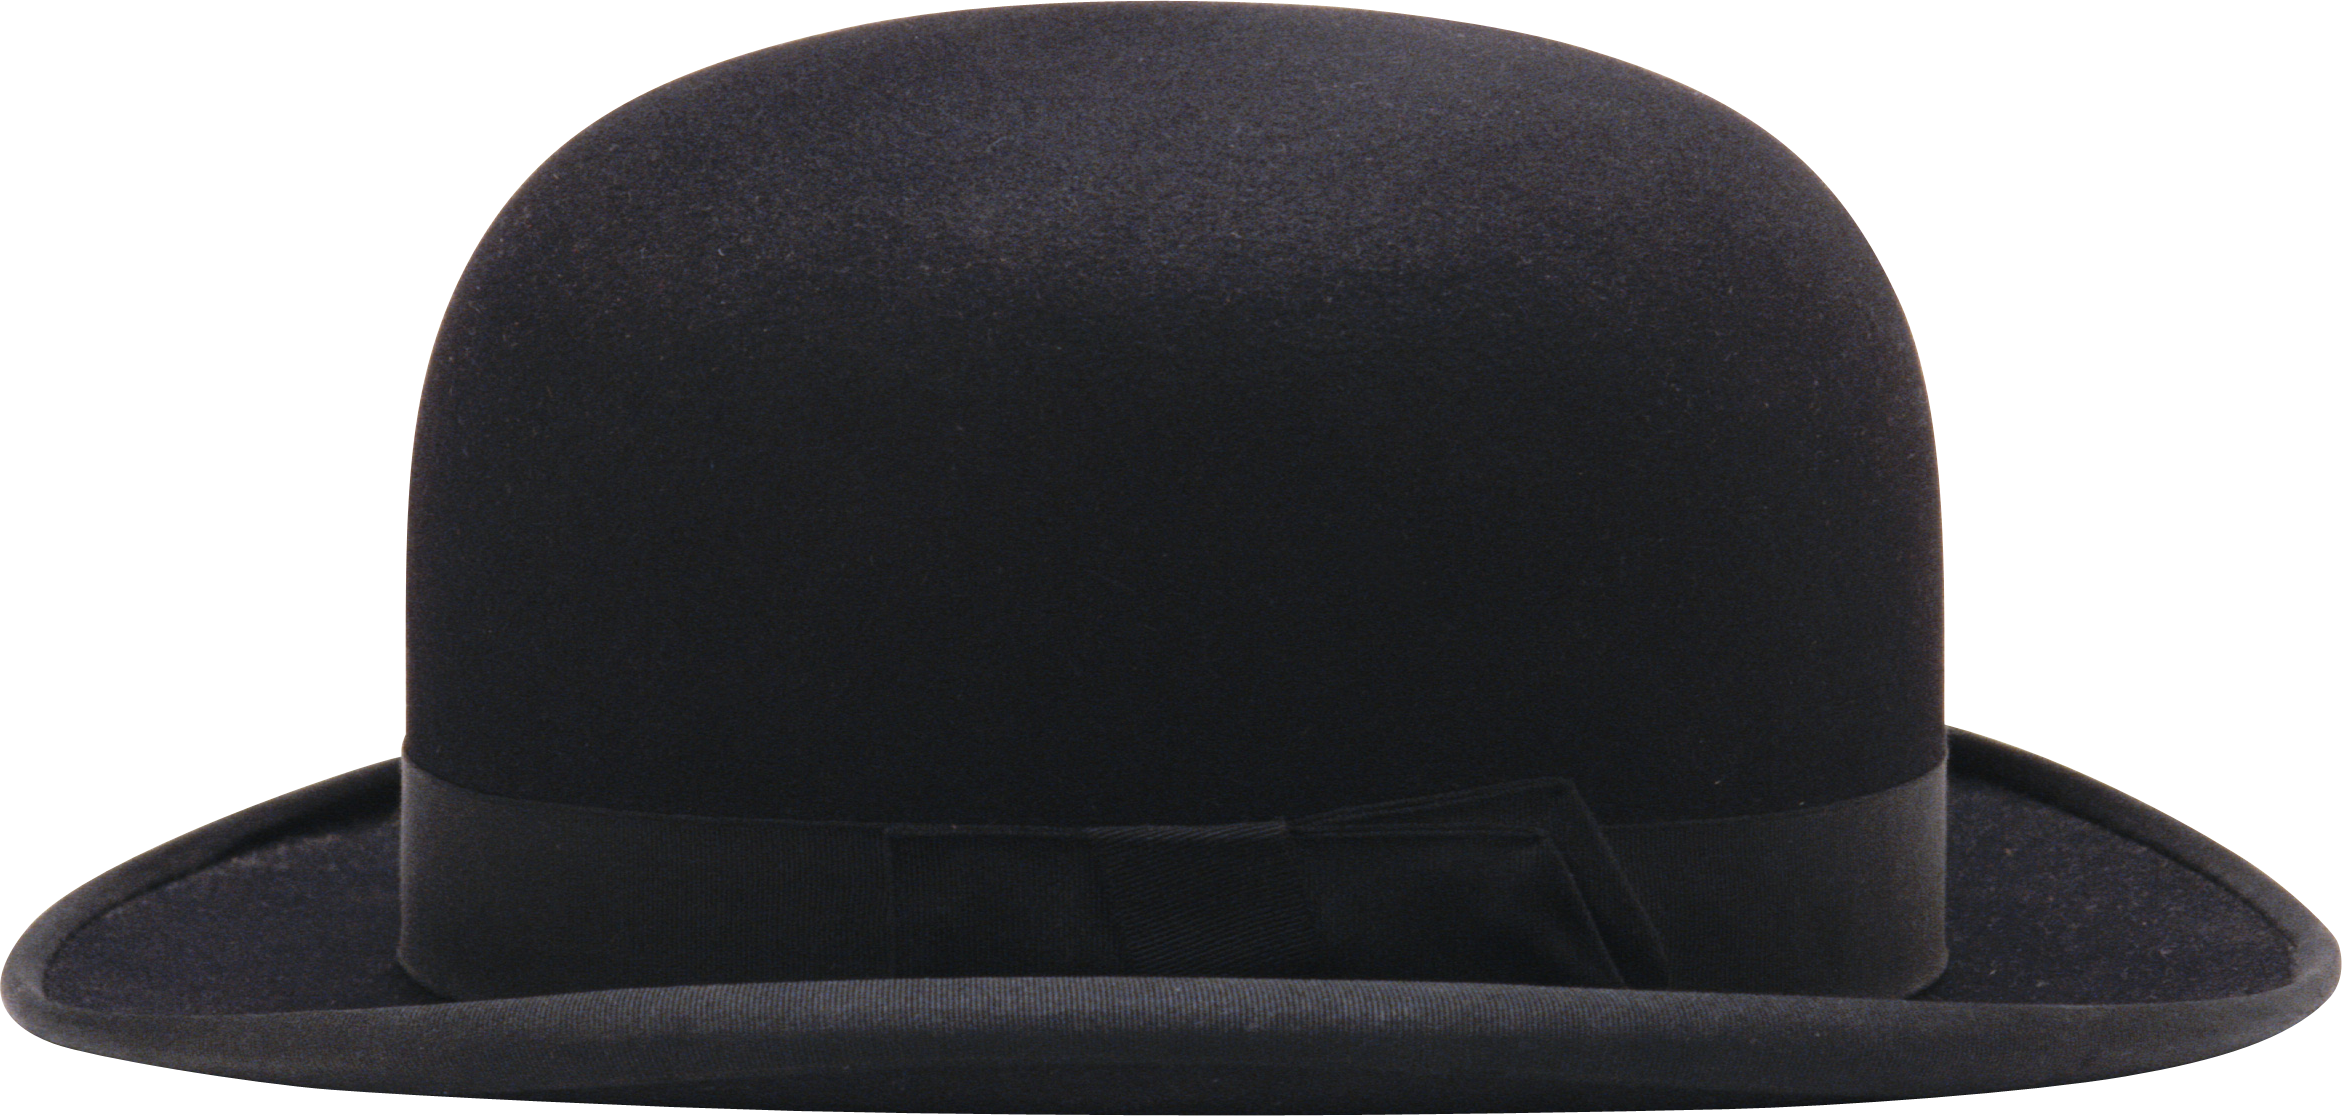 Bowler Hat PNG HD - 150873